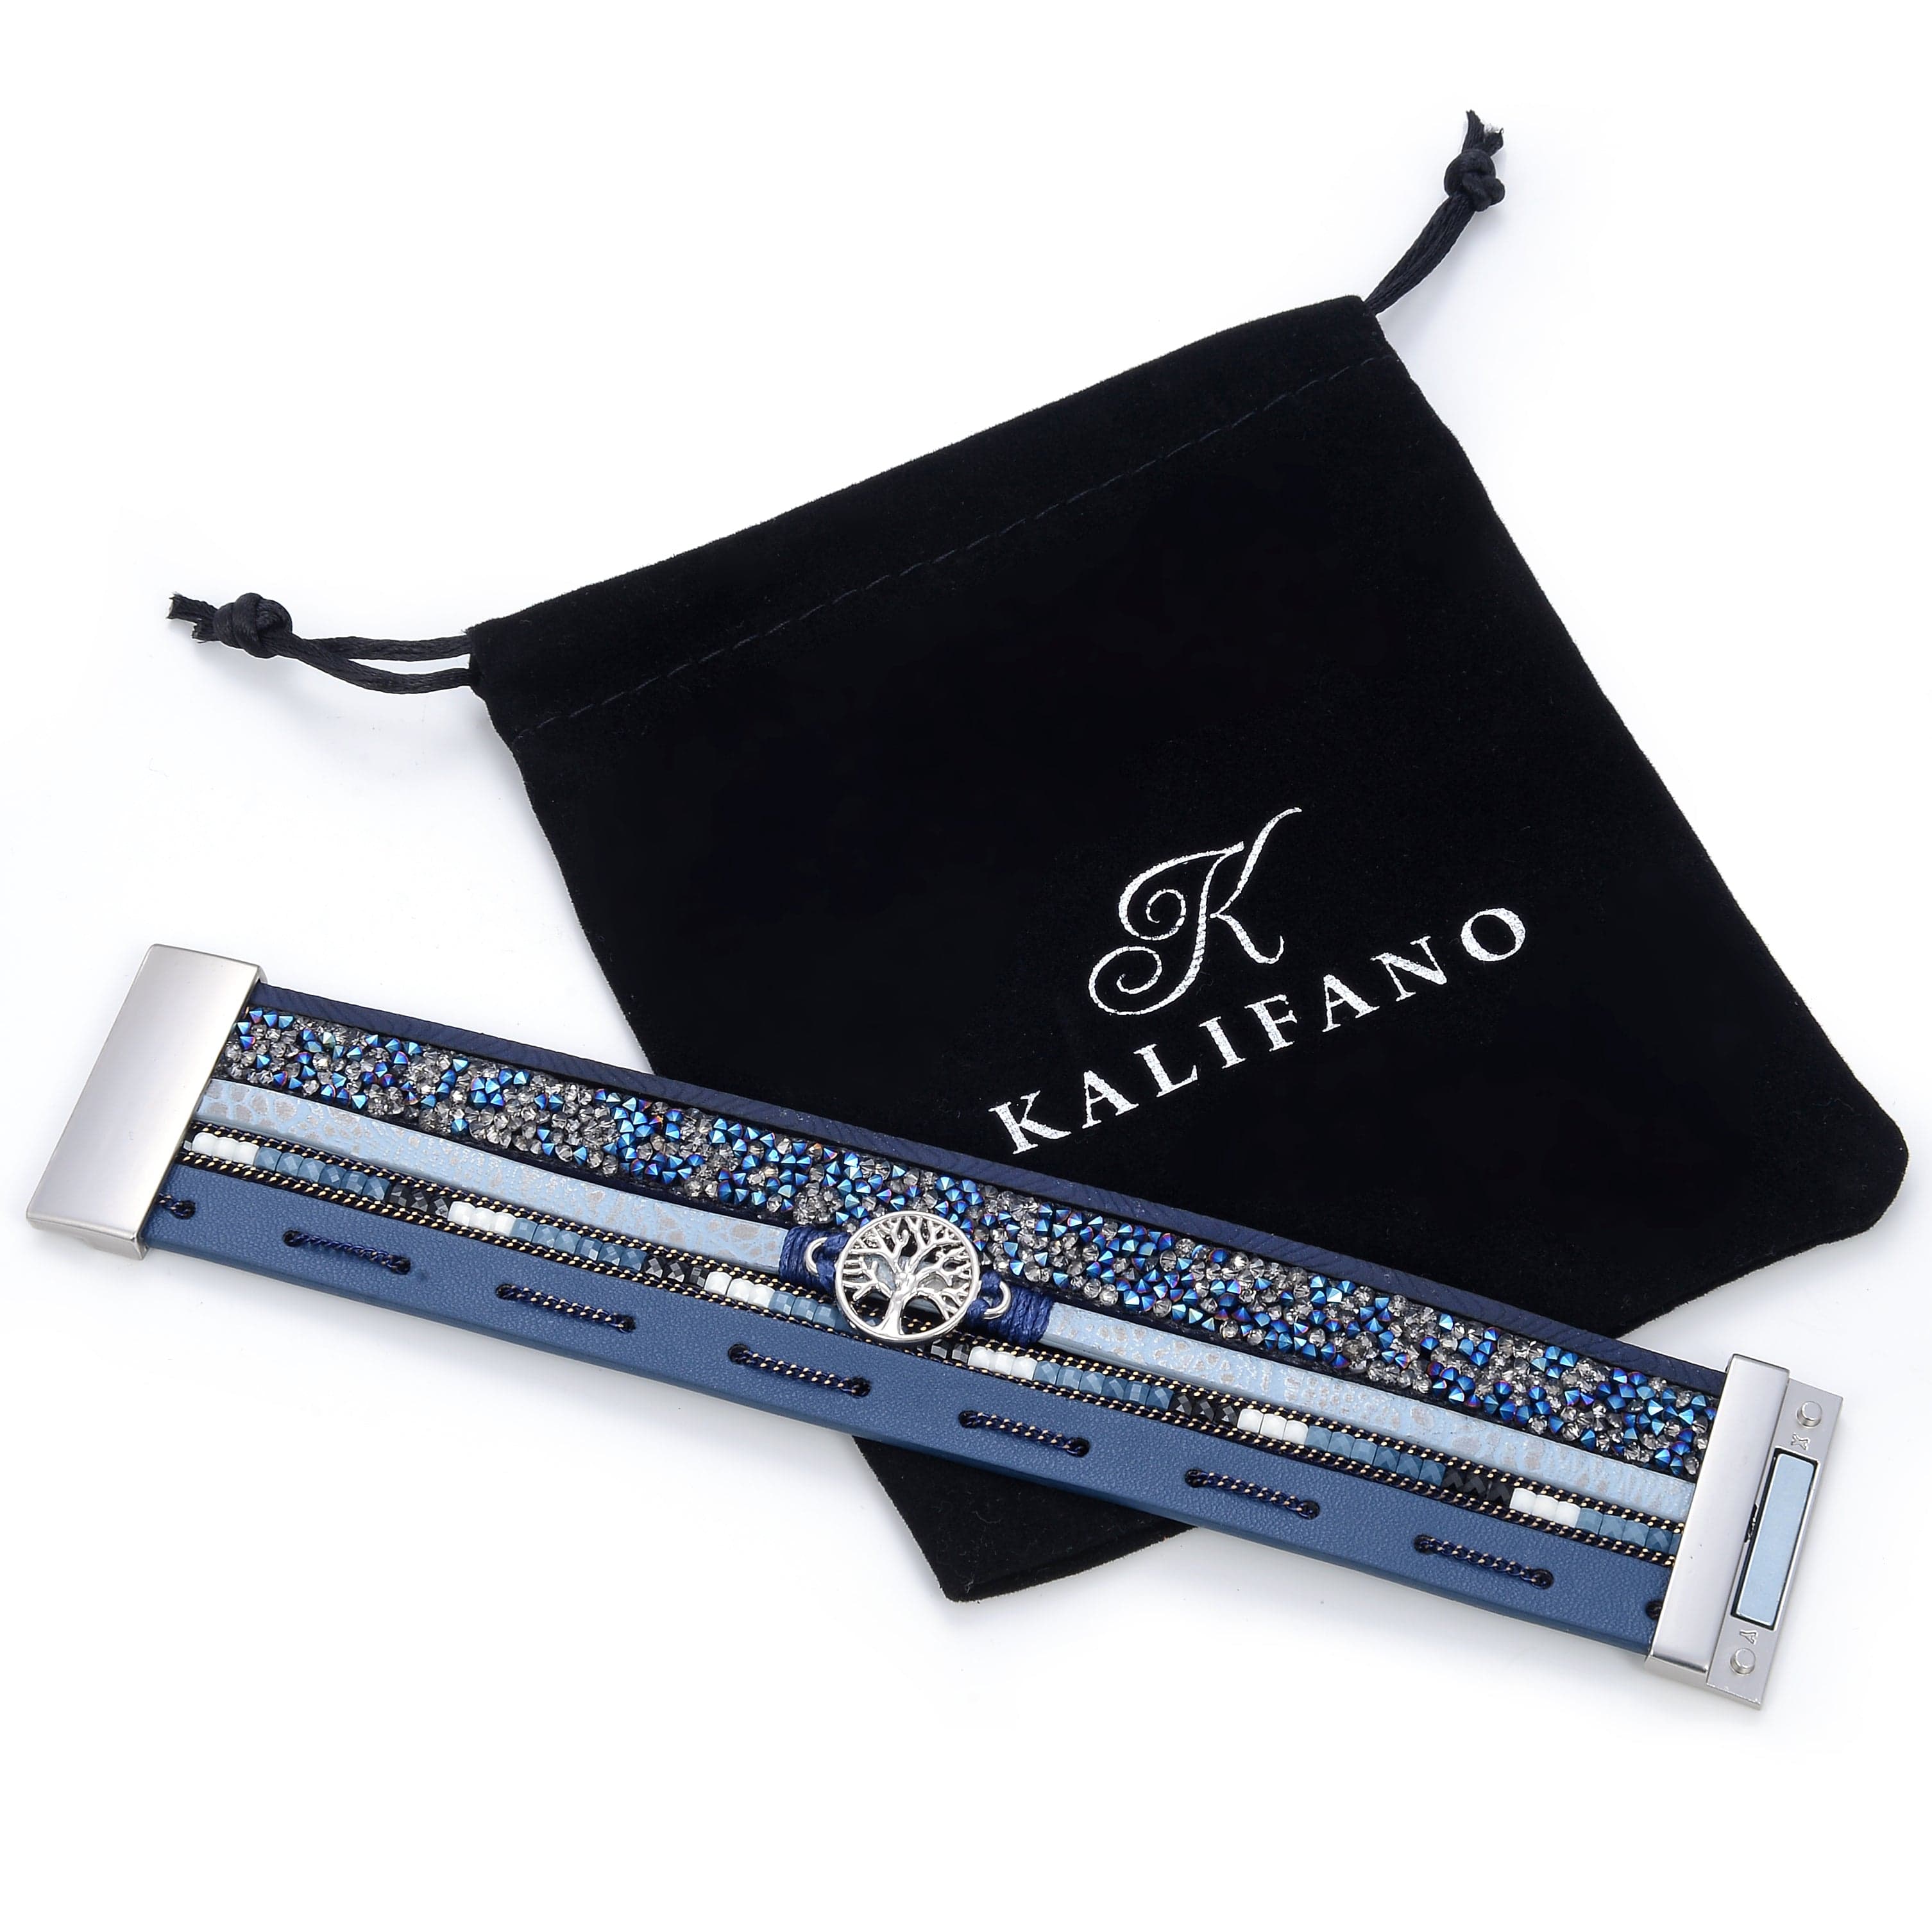 Kalifano Multiwrap Bracelets Multiple Layer Mosaic Crystal Leather Strand Bracelet Navy Blue With Magnetic Clasp BMW-08-NY